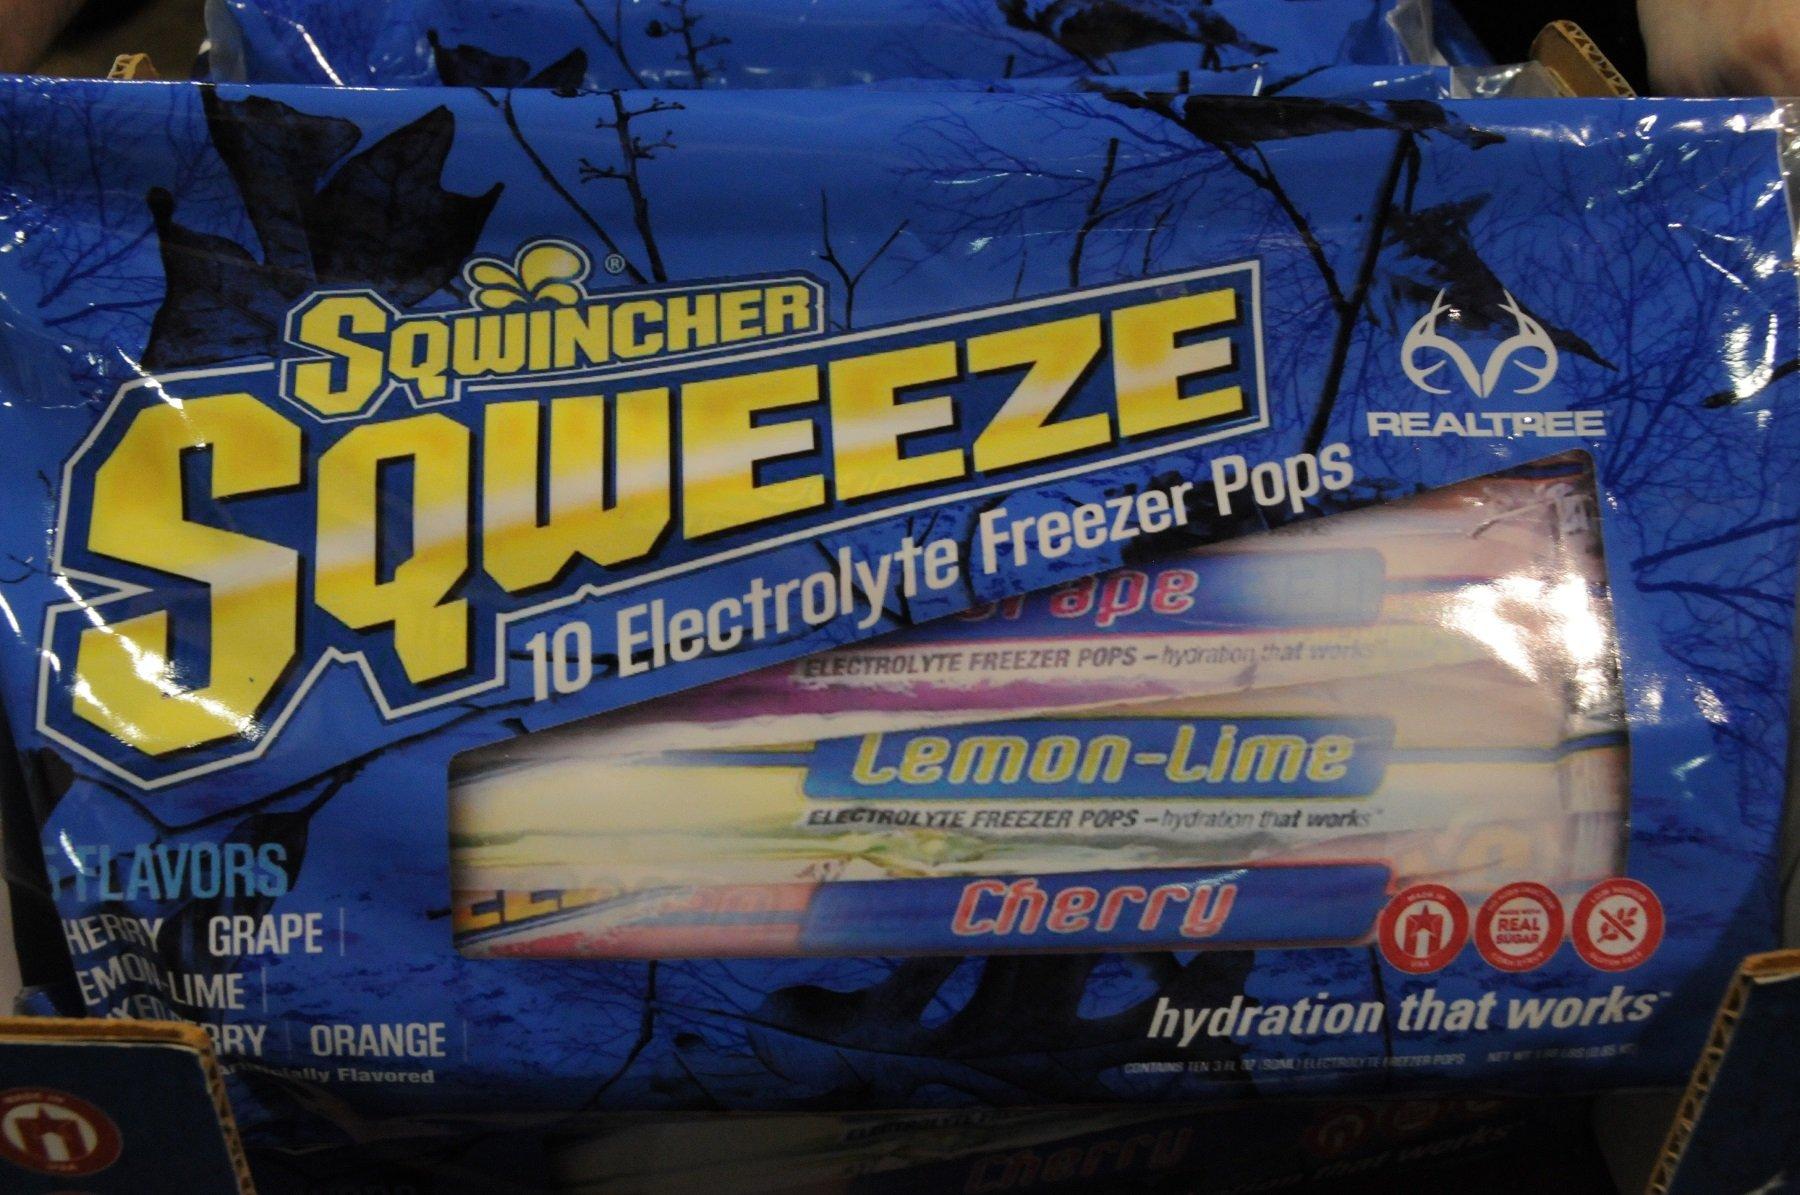 Sqwincher Realtree Electrolyte Freezer Pop